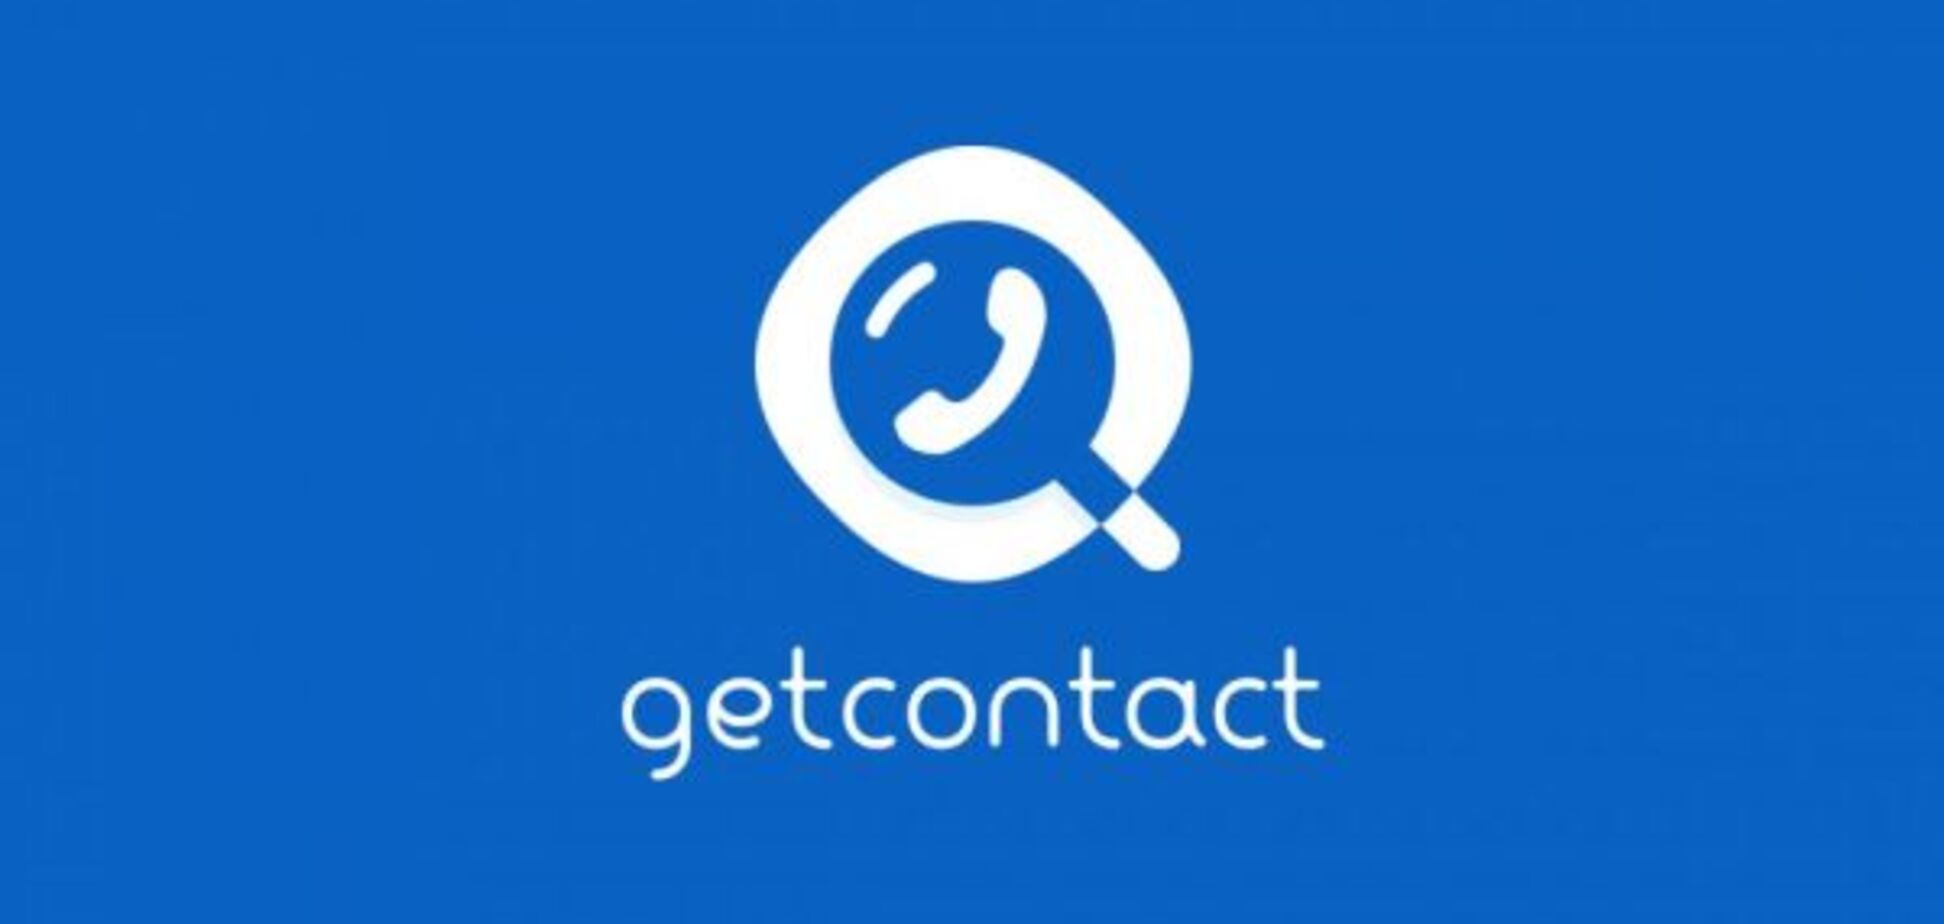 Ажіотаж навколо Get Contact: як видалити номер